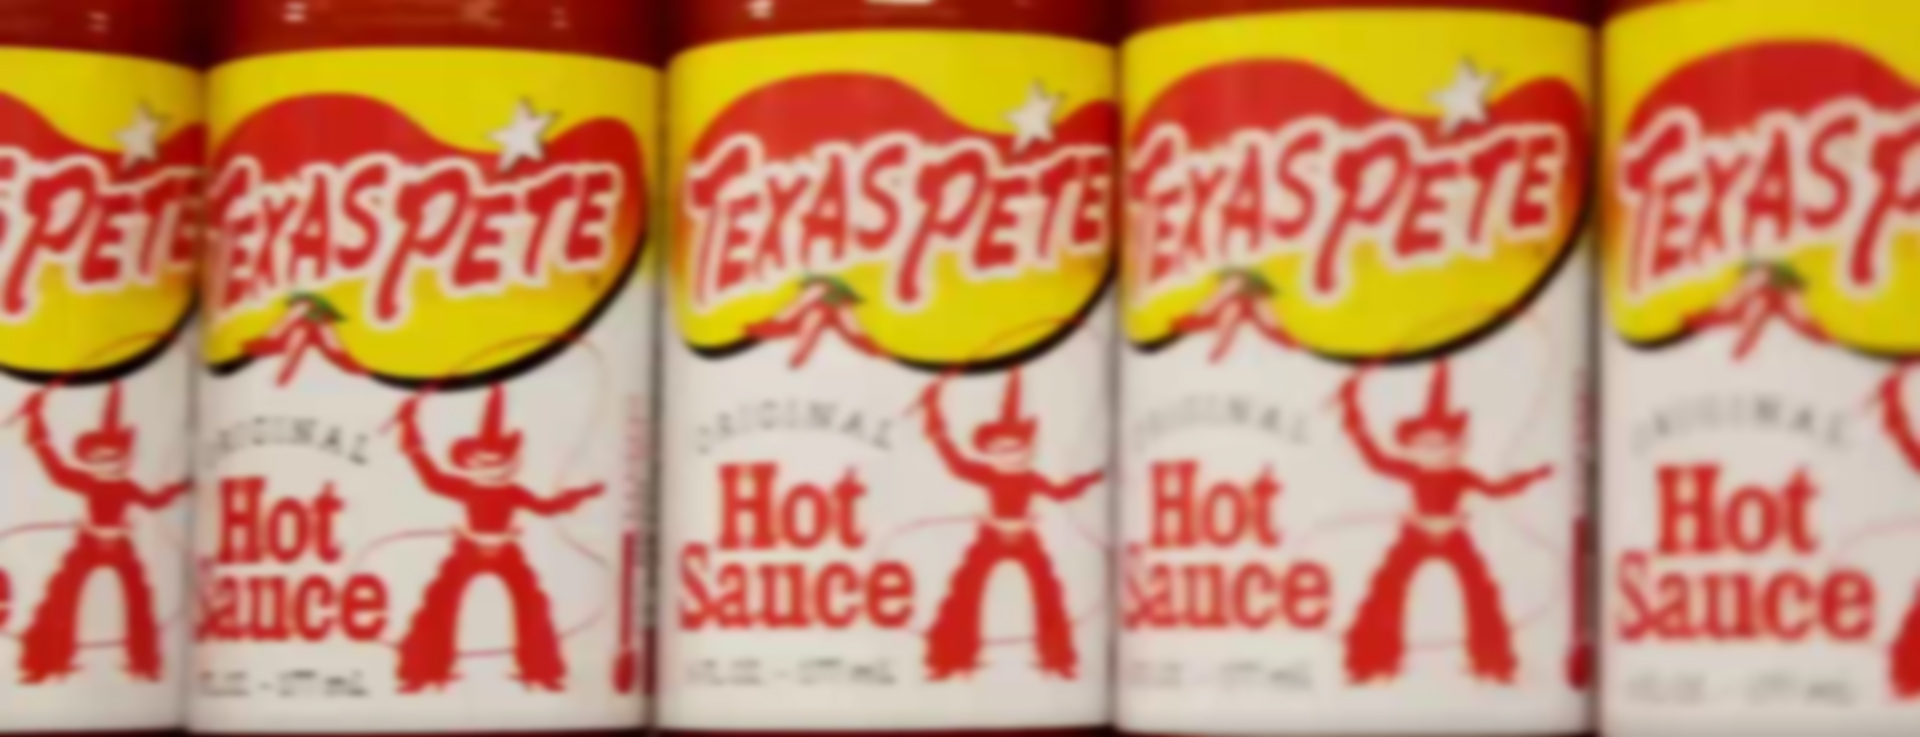 HOTTER HOT SAUCE – Texas Pete Foodservice